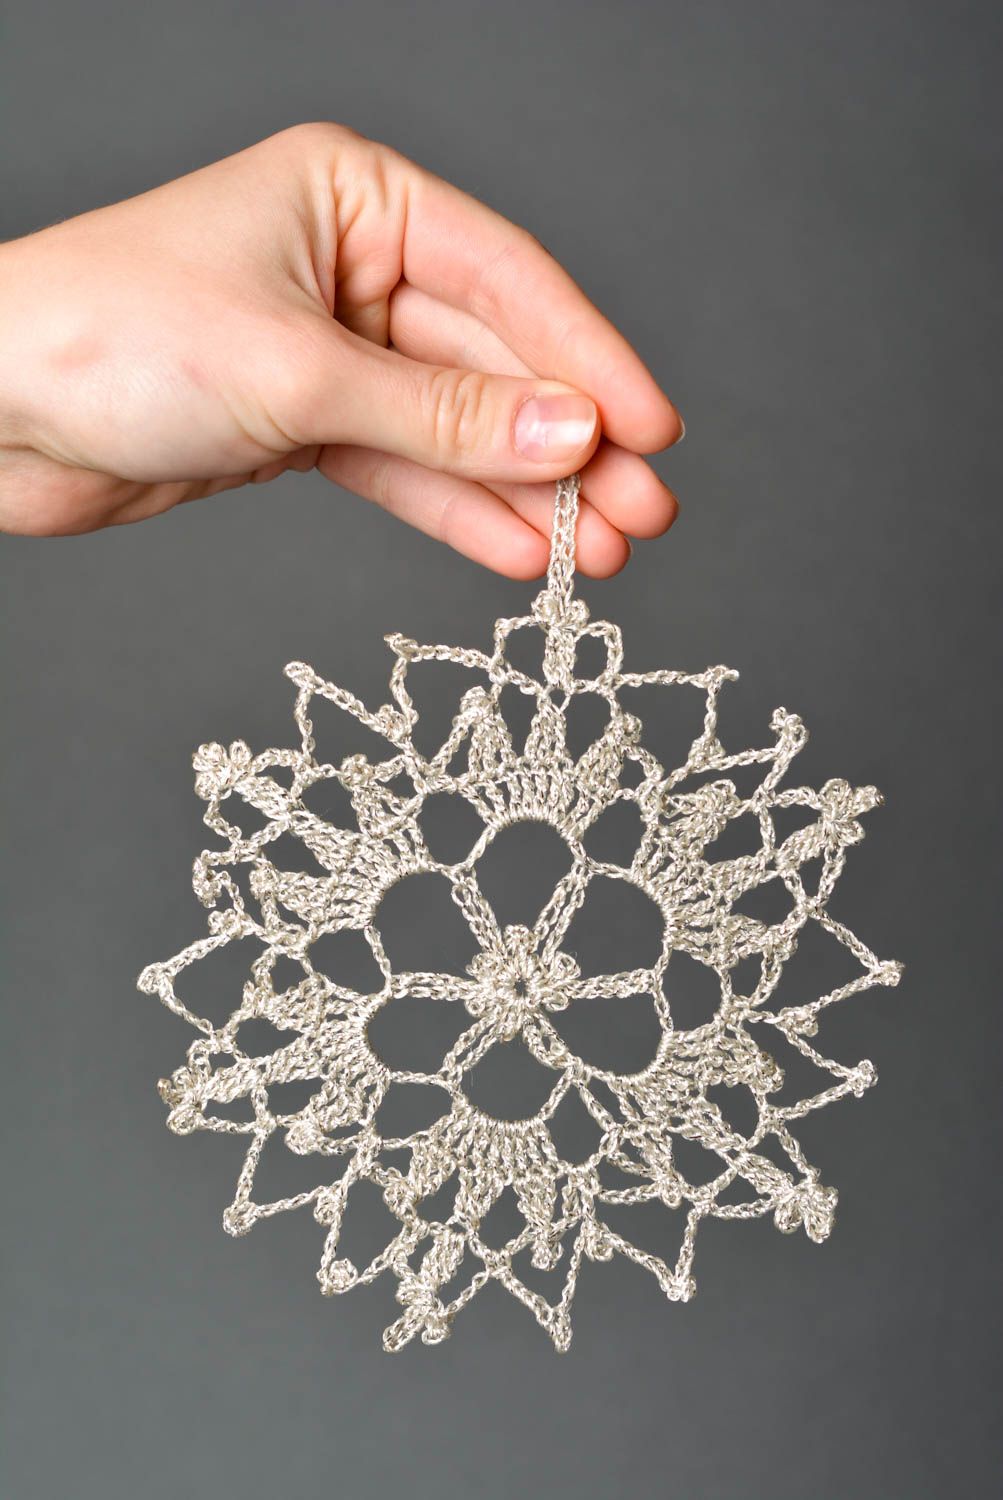 Handmade crocheted snowflake Christmas tree decor interior decor ideas photo 2